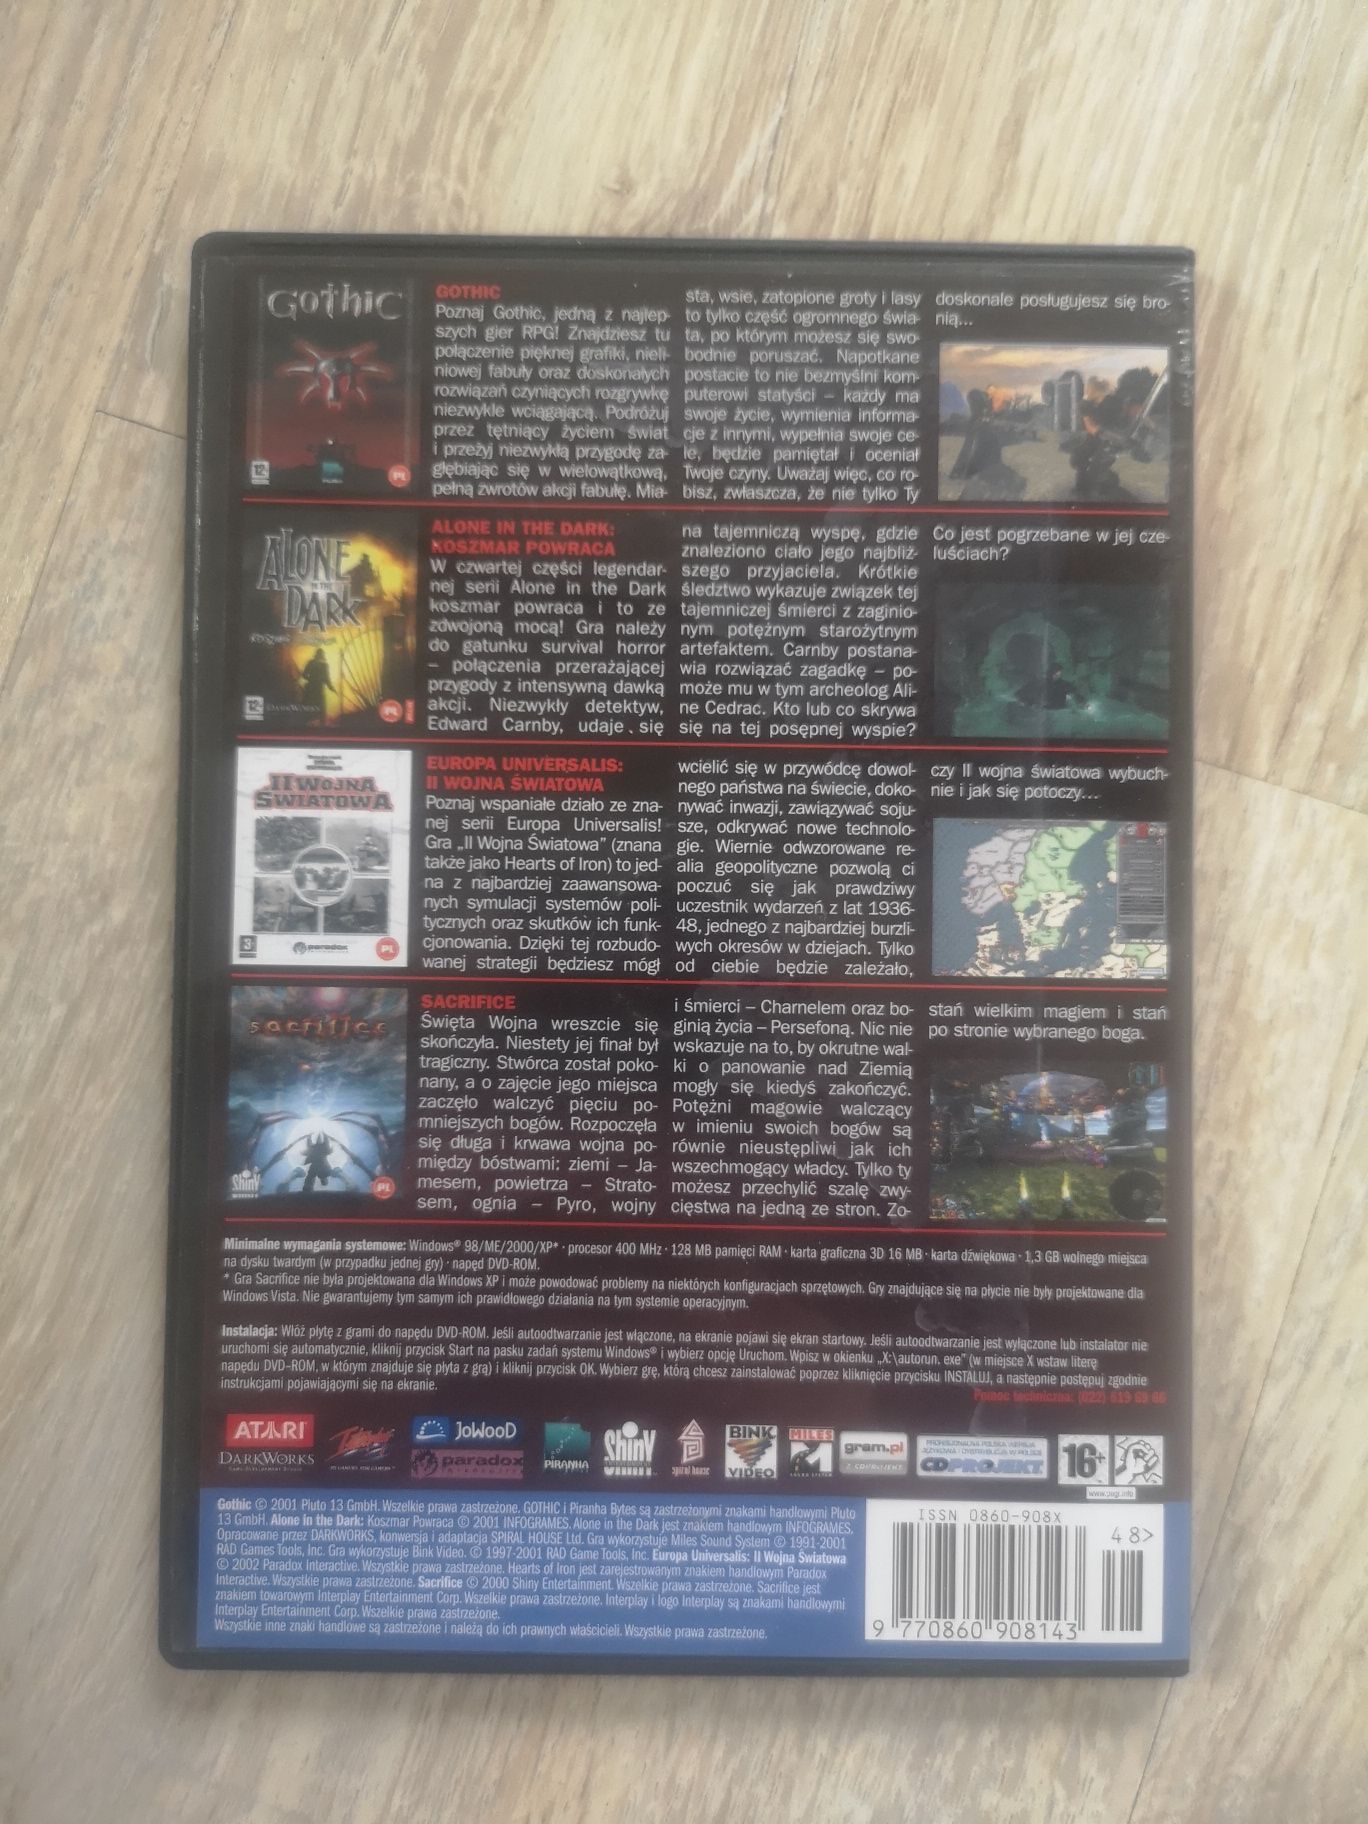 4 gry PC: Gothic, Alone in the dark, Europa Universalis II, Sacrifice